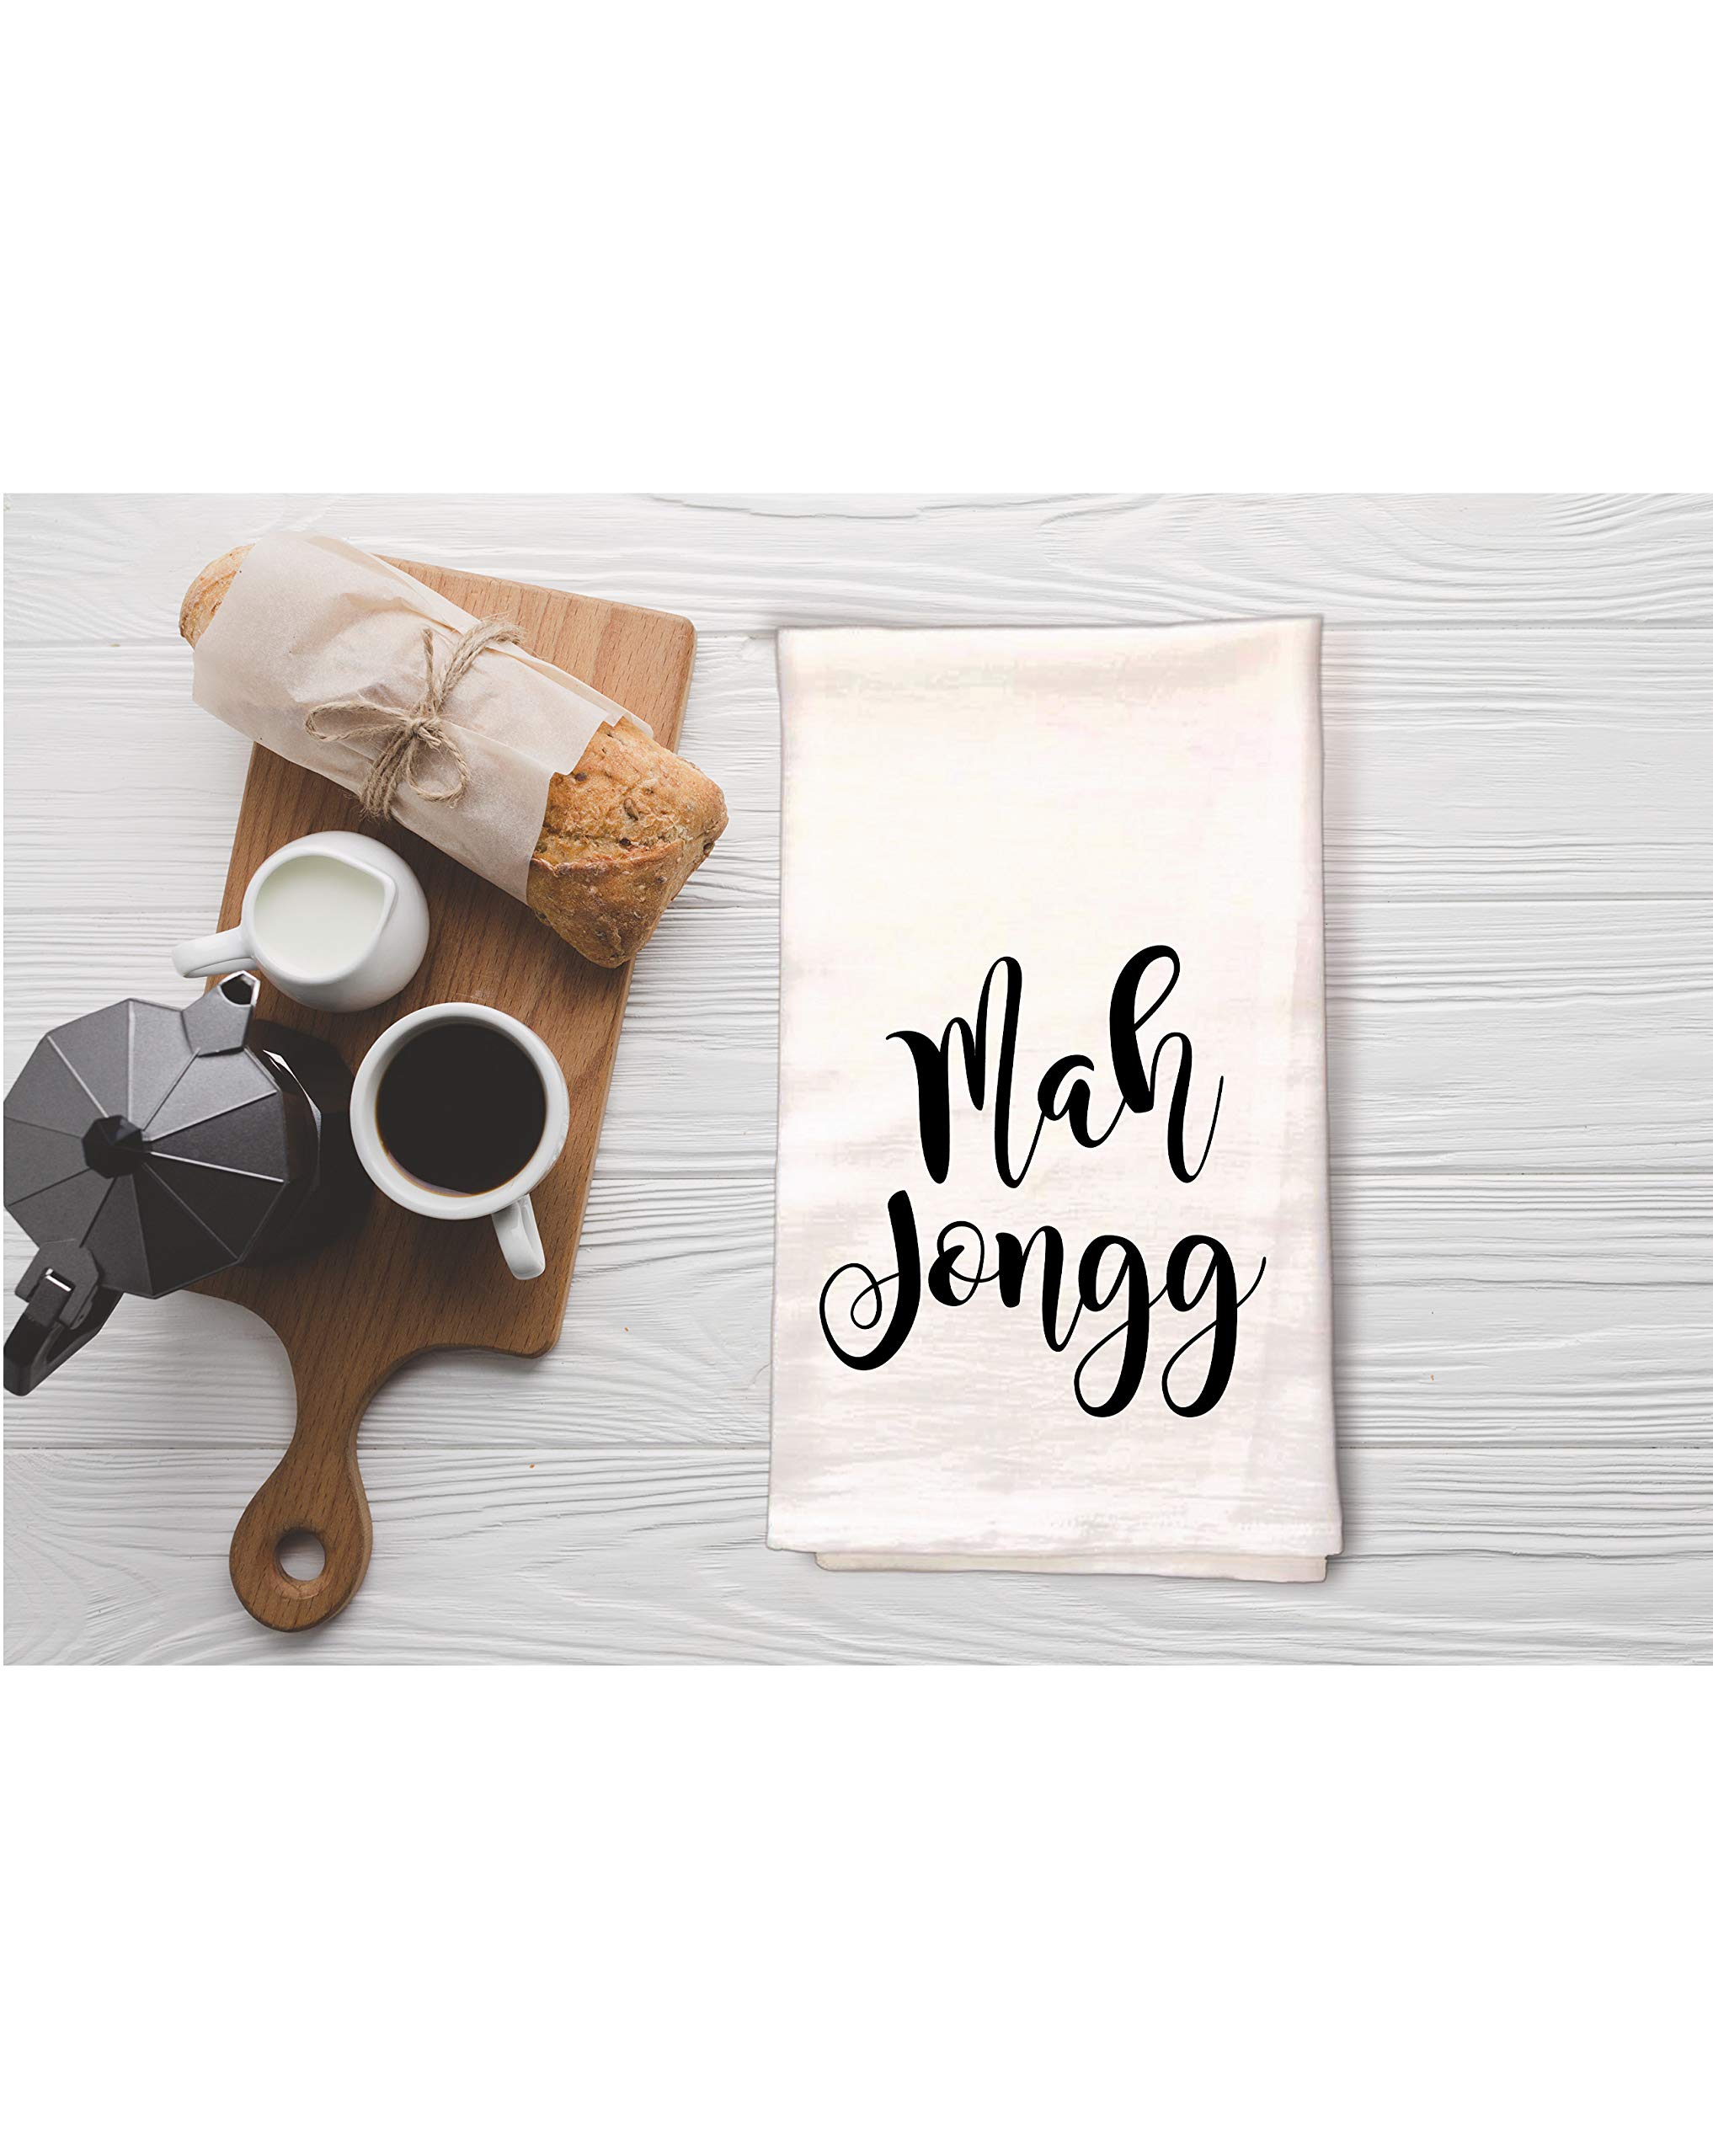 mah jongg - Dish Towel Kitchen Tea Towel Funny Saying Humorous Flour Sack Towels Great Housewarming Gift 28 inch by 28 inch, 100% Cotton, Multi-Purpose Towel